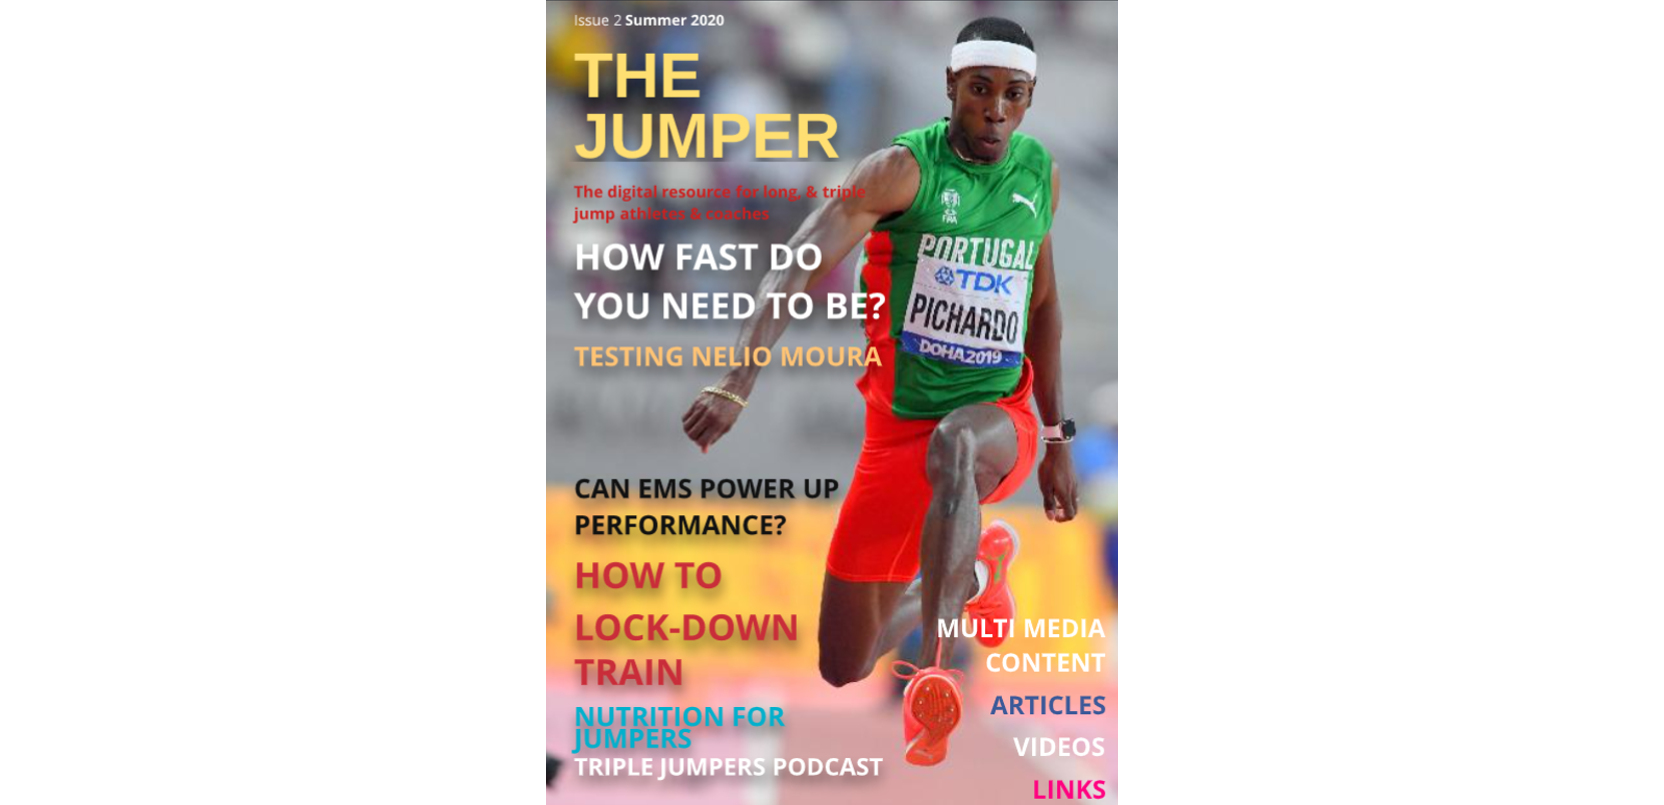 The Jumper magazine by John Shepherd